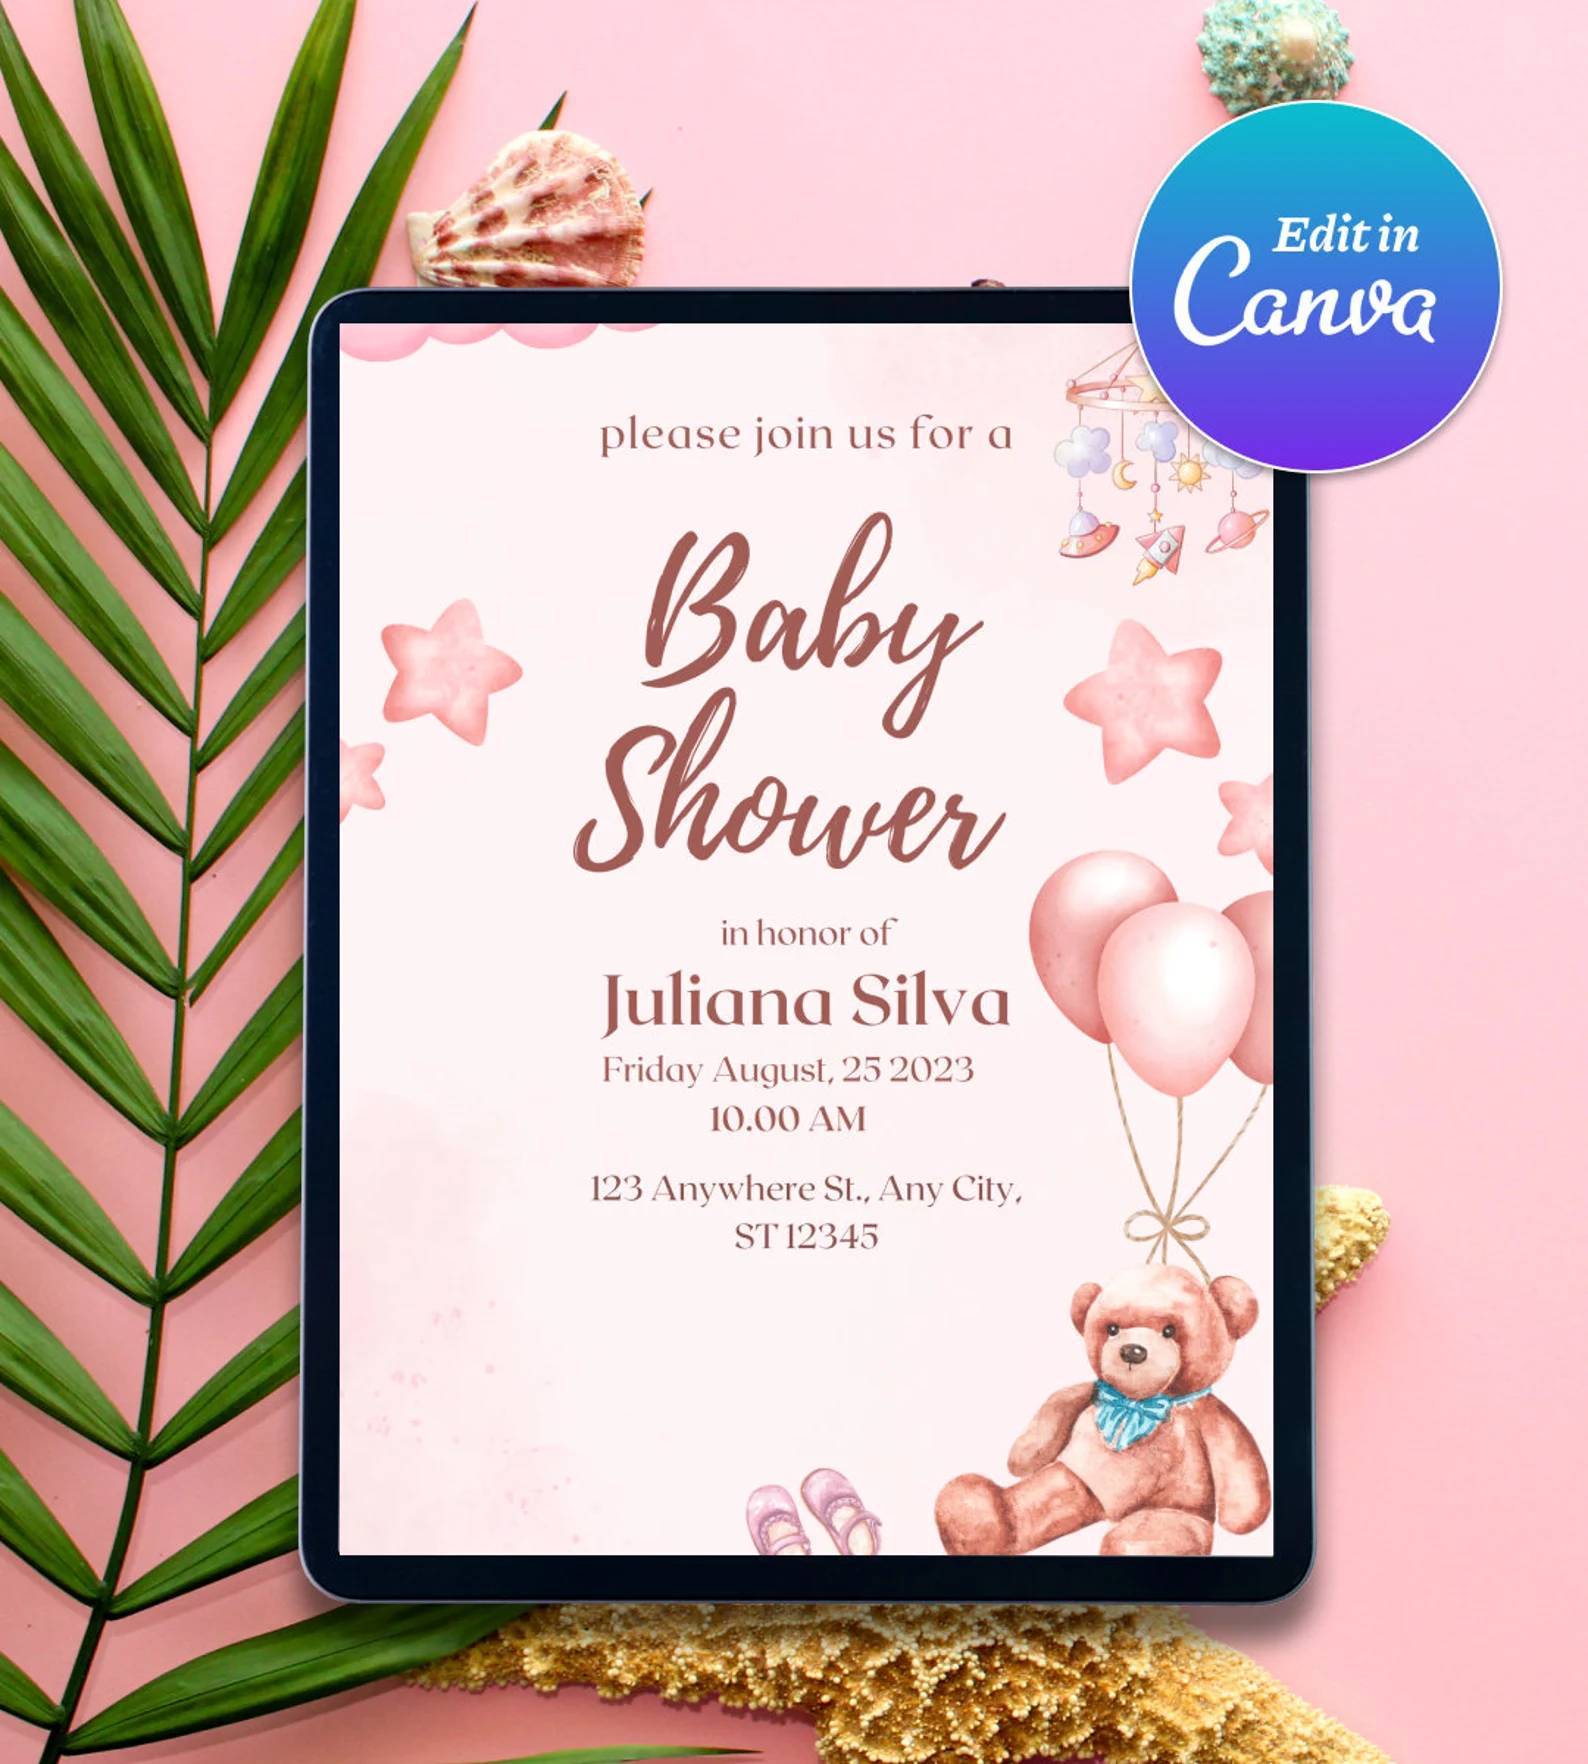 Editable Baby Shower Invitation template Canva